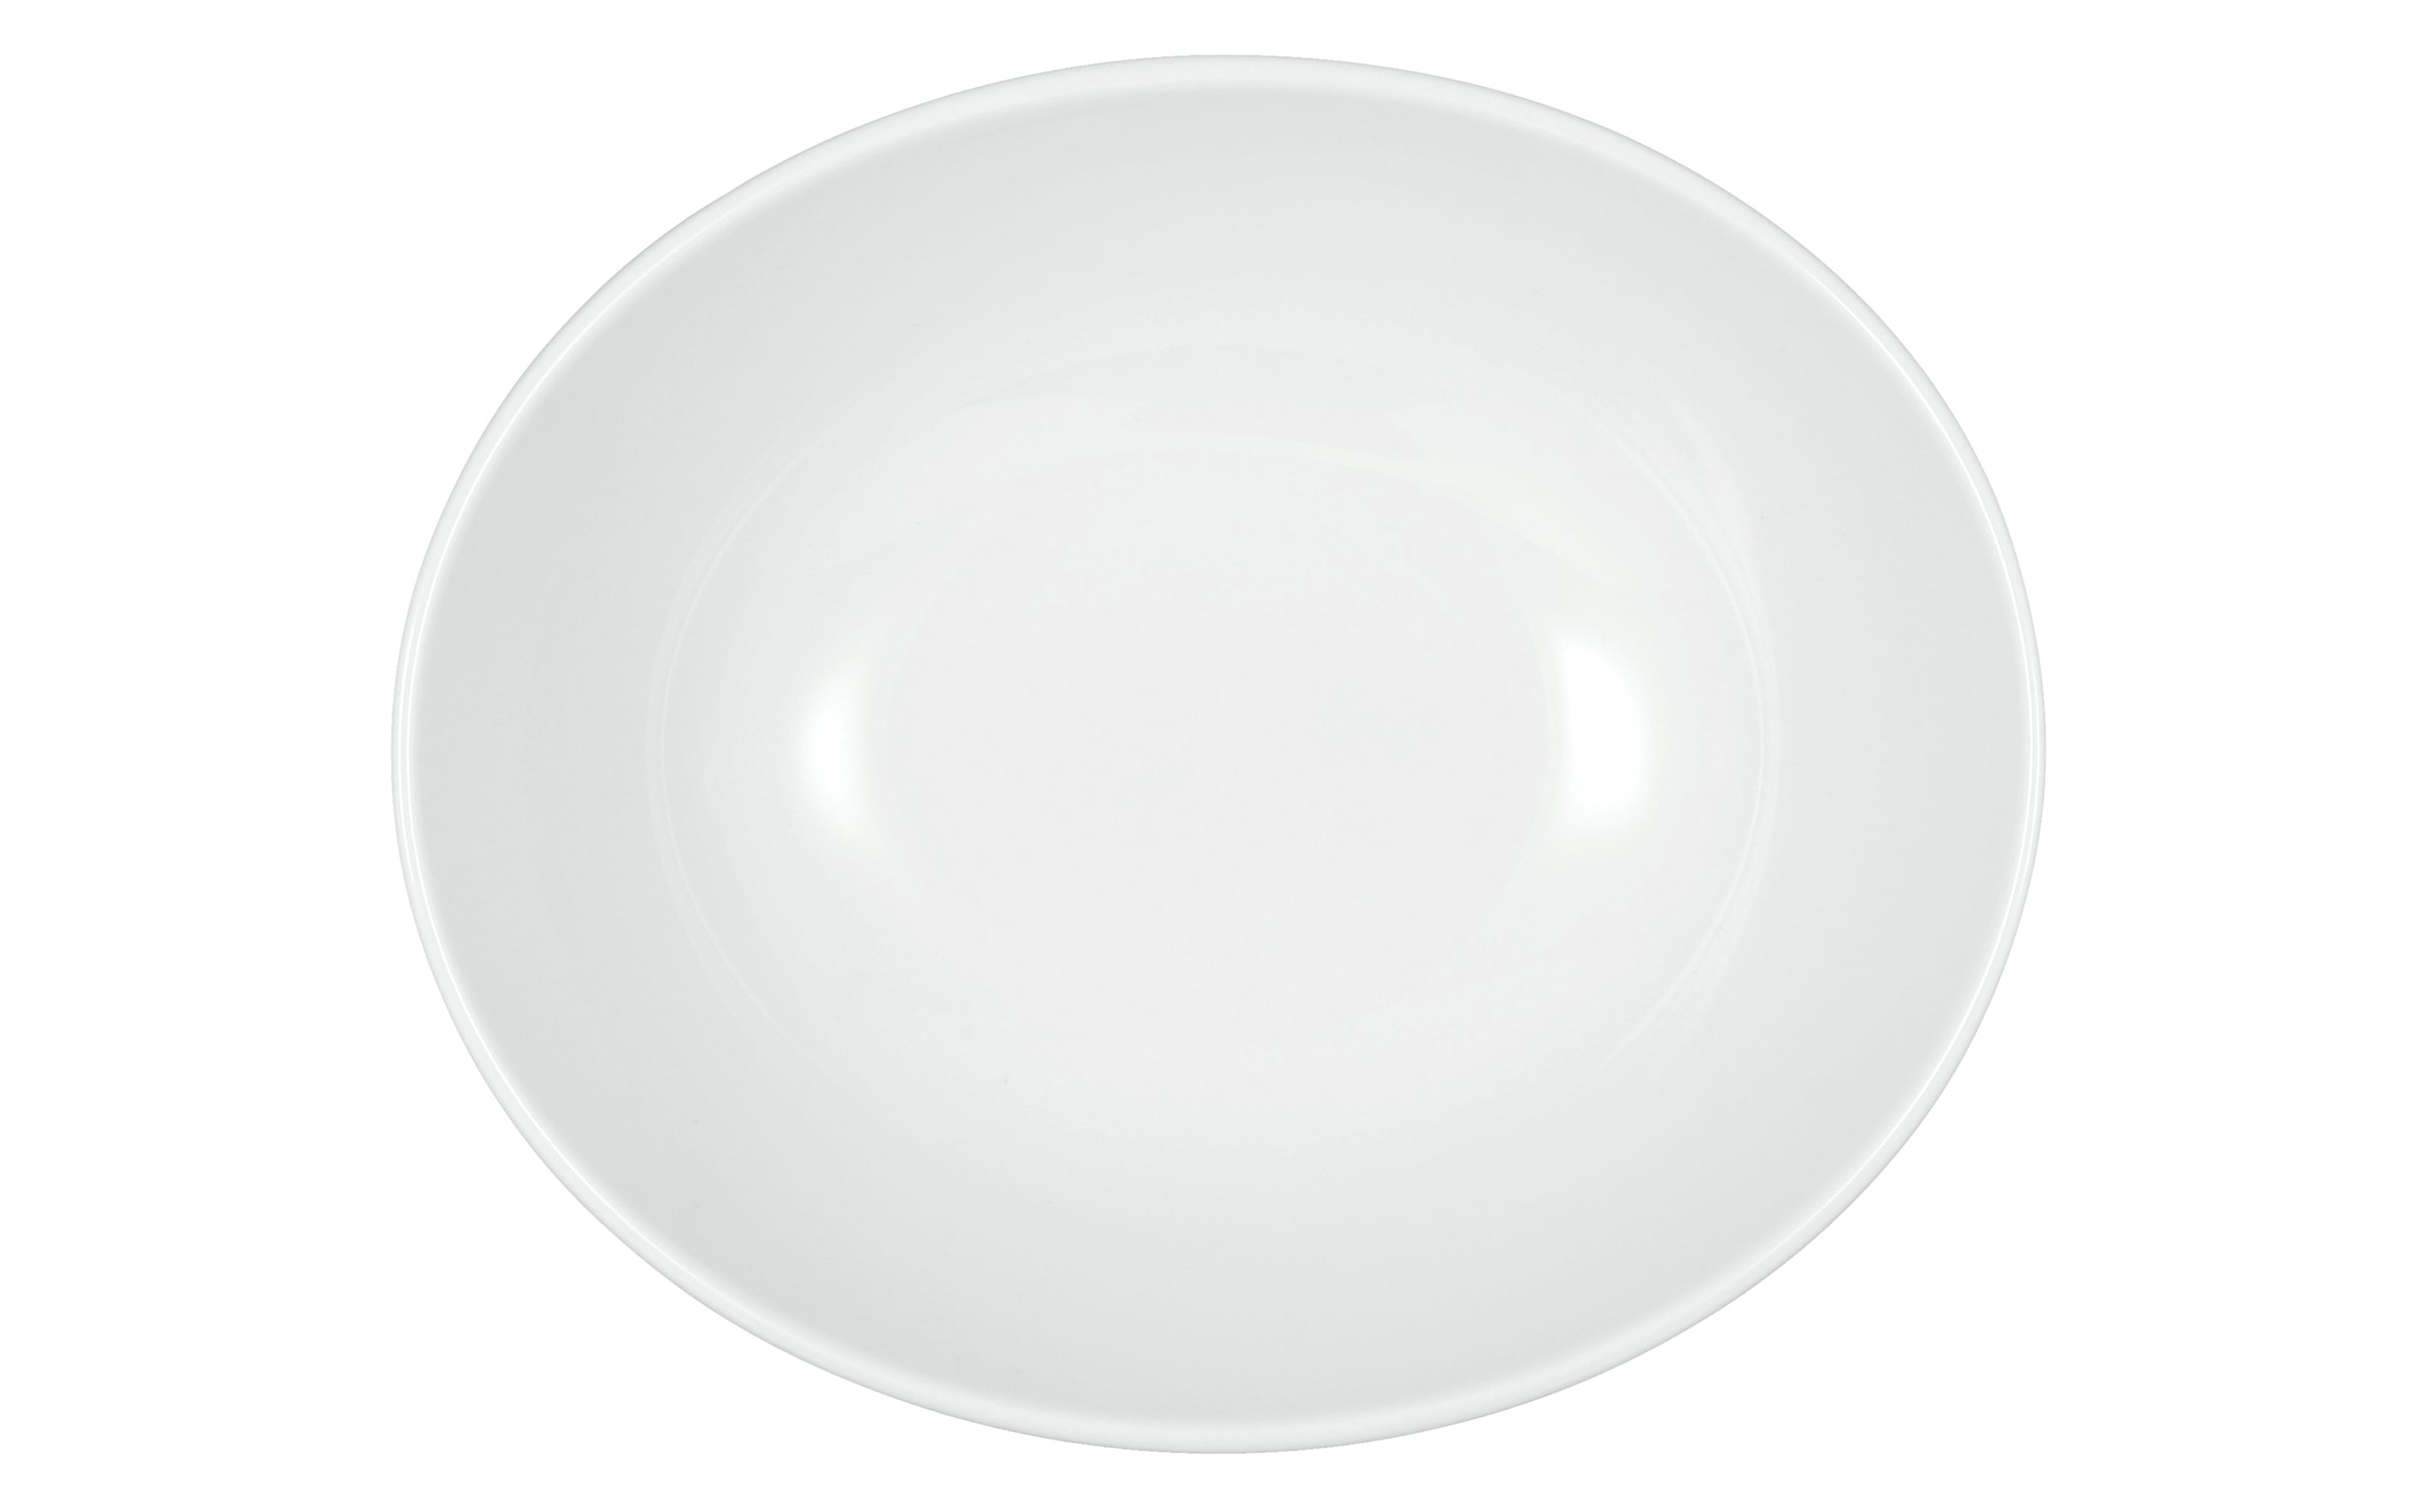 Schüssel Modern Life in weiß/oval, 21 cm